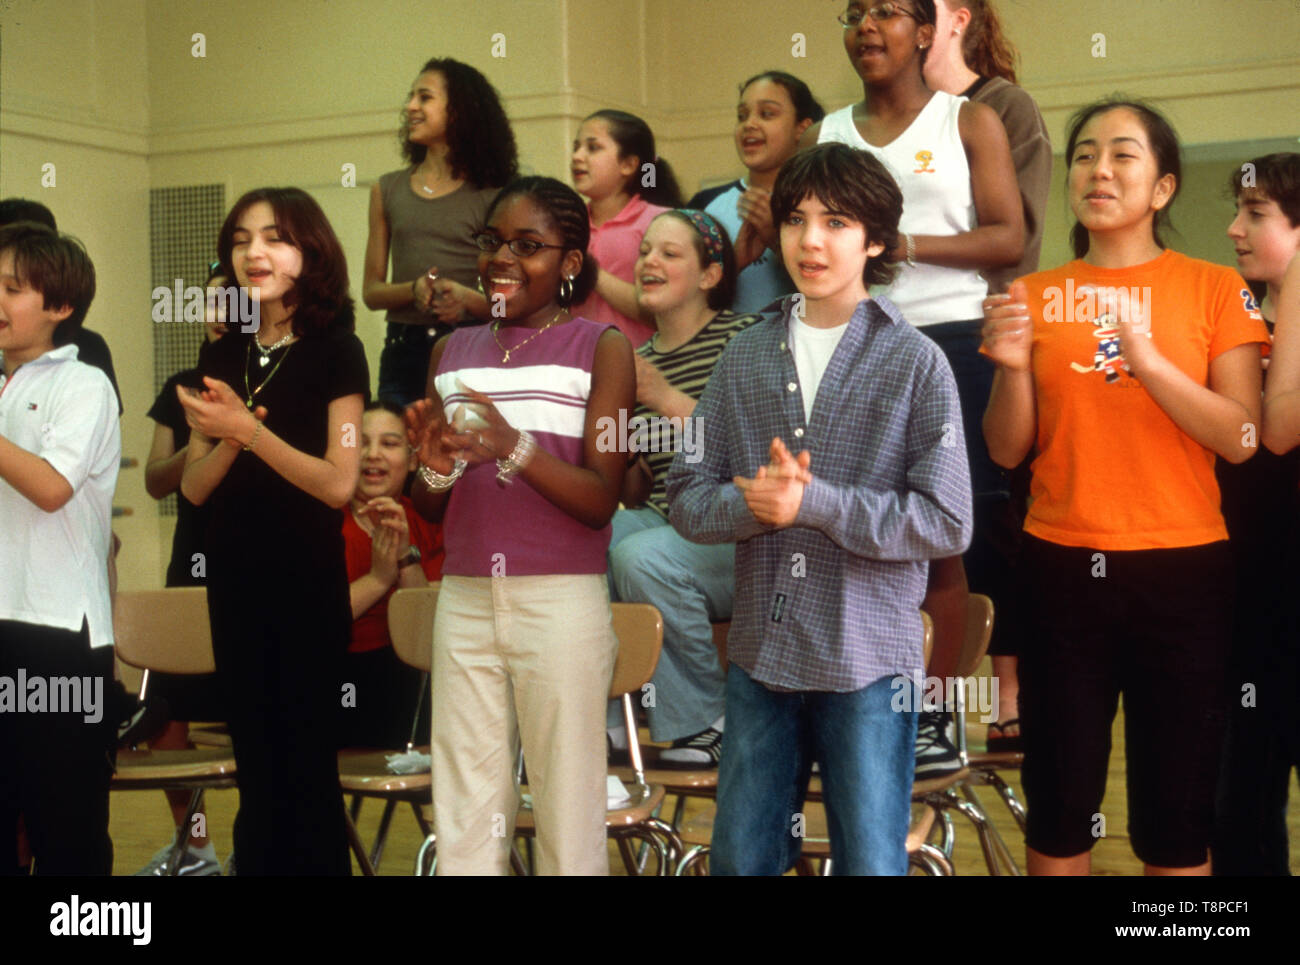 Junior high school chorus pract5ice at a Manhattan Public School, New York City. Stock Photo